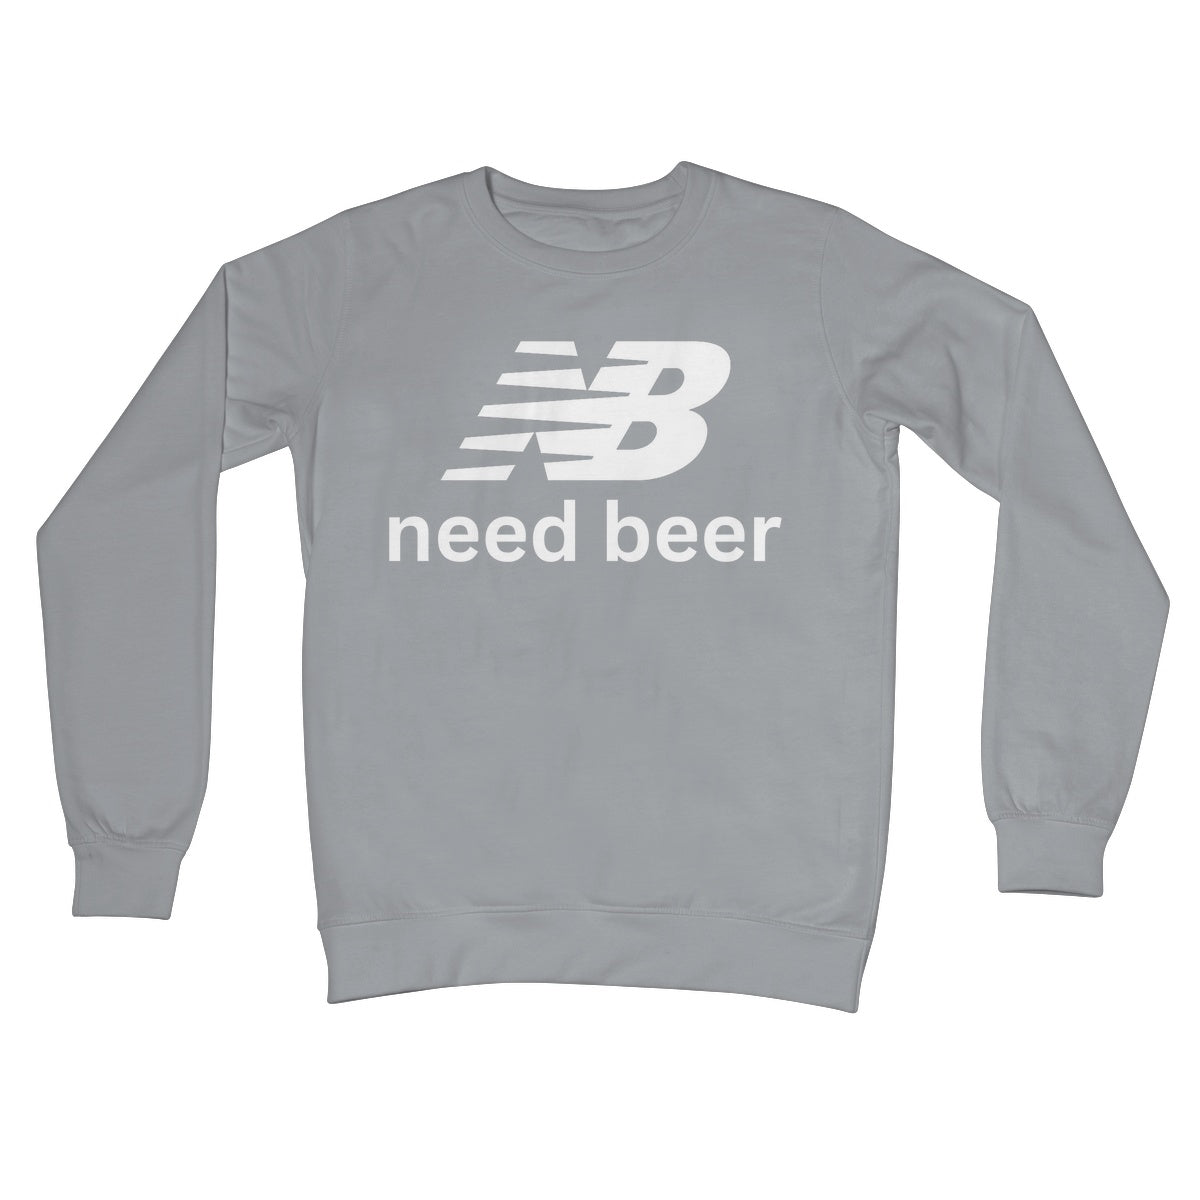 need beer jumper grey